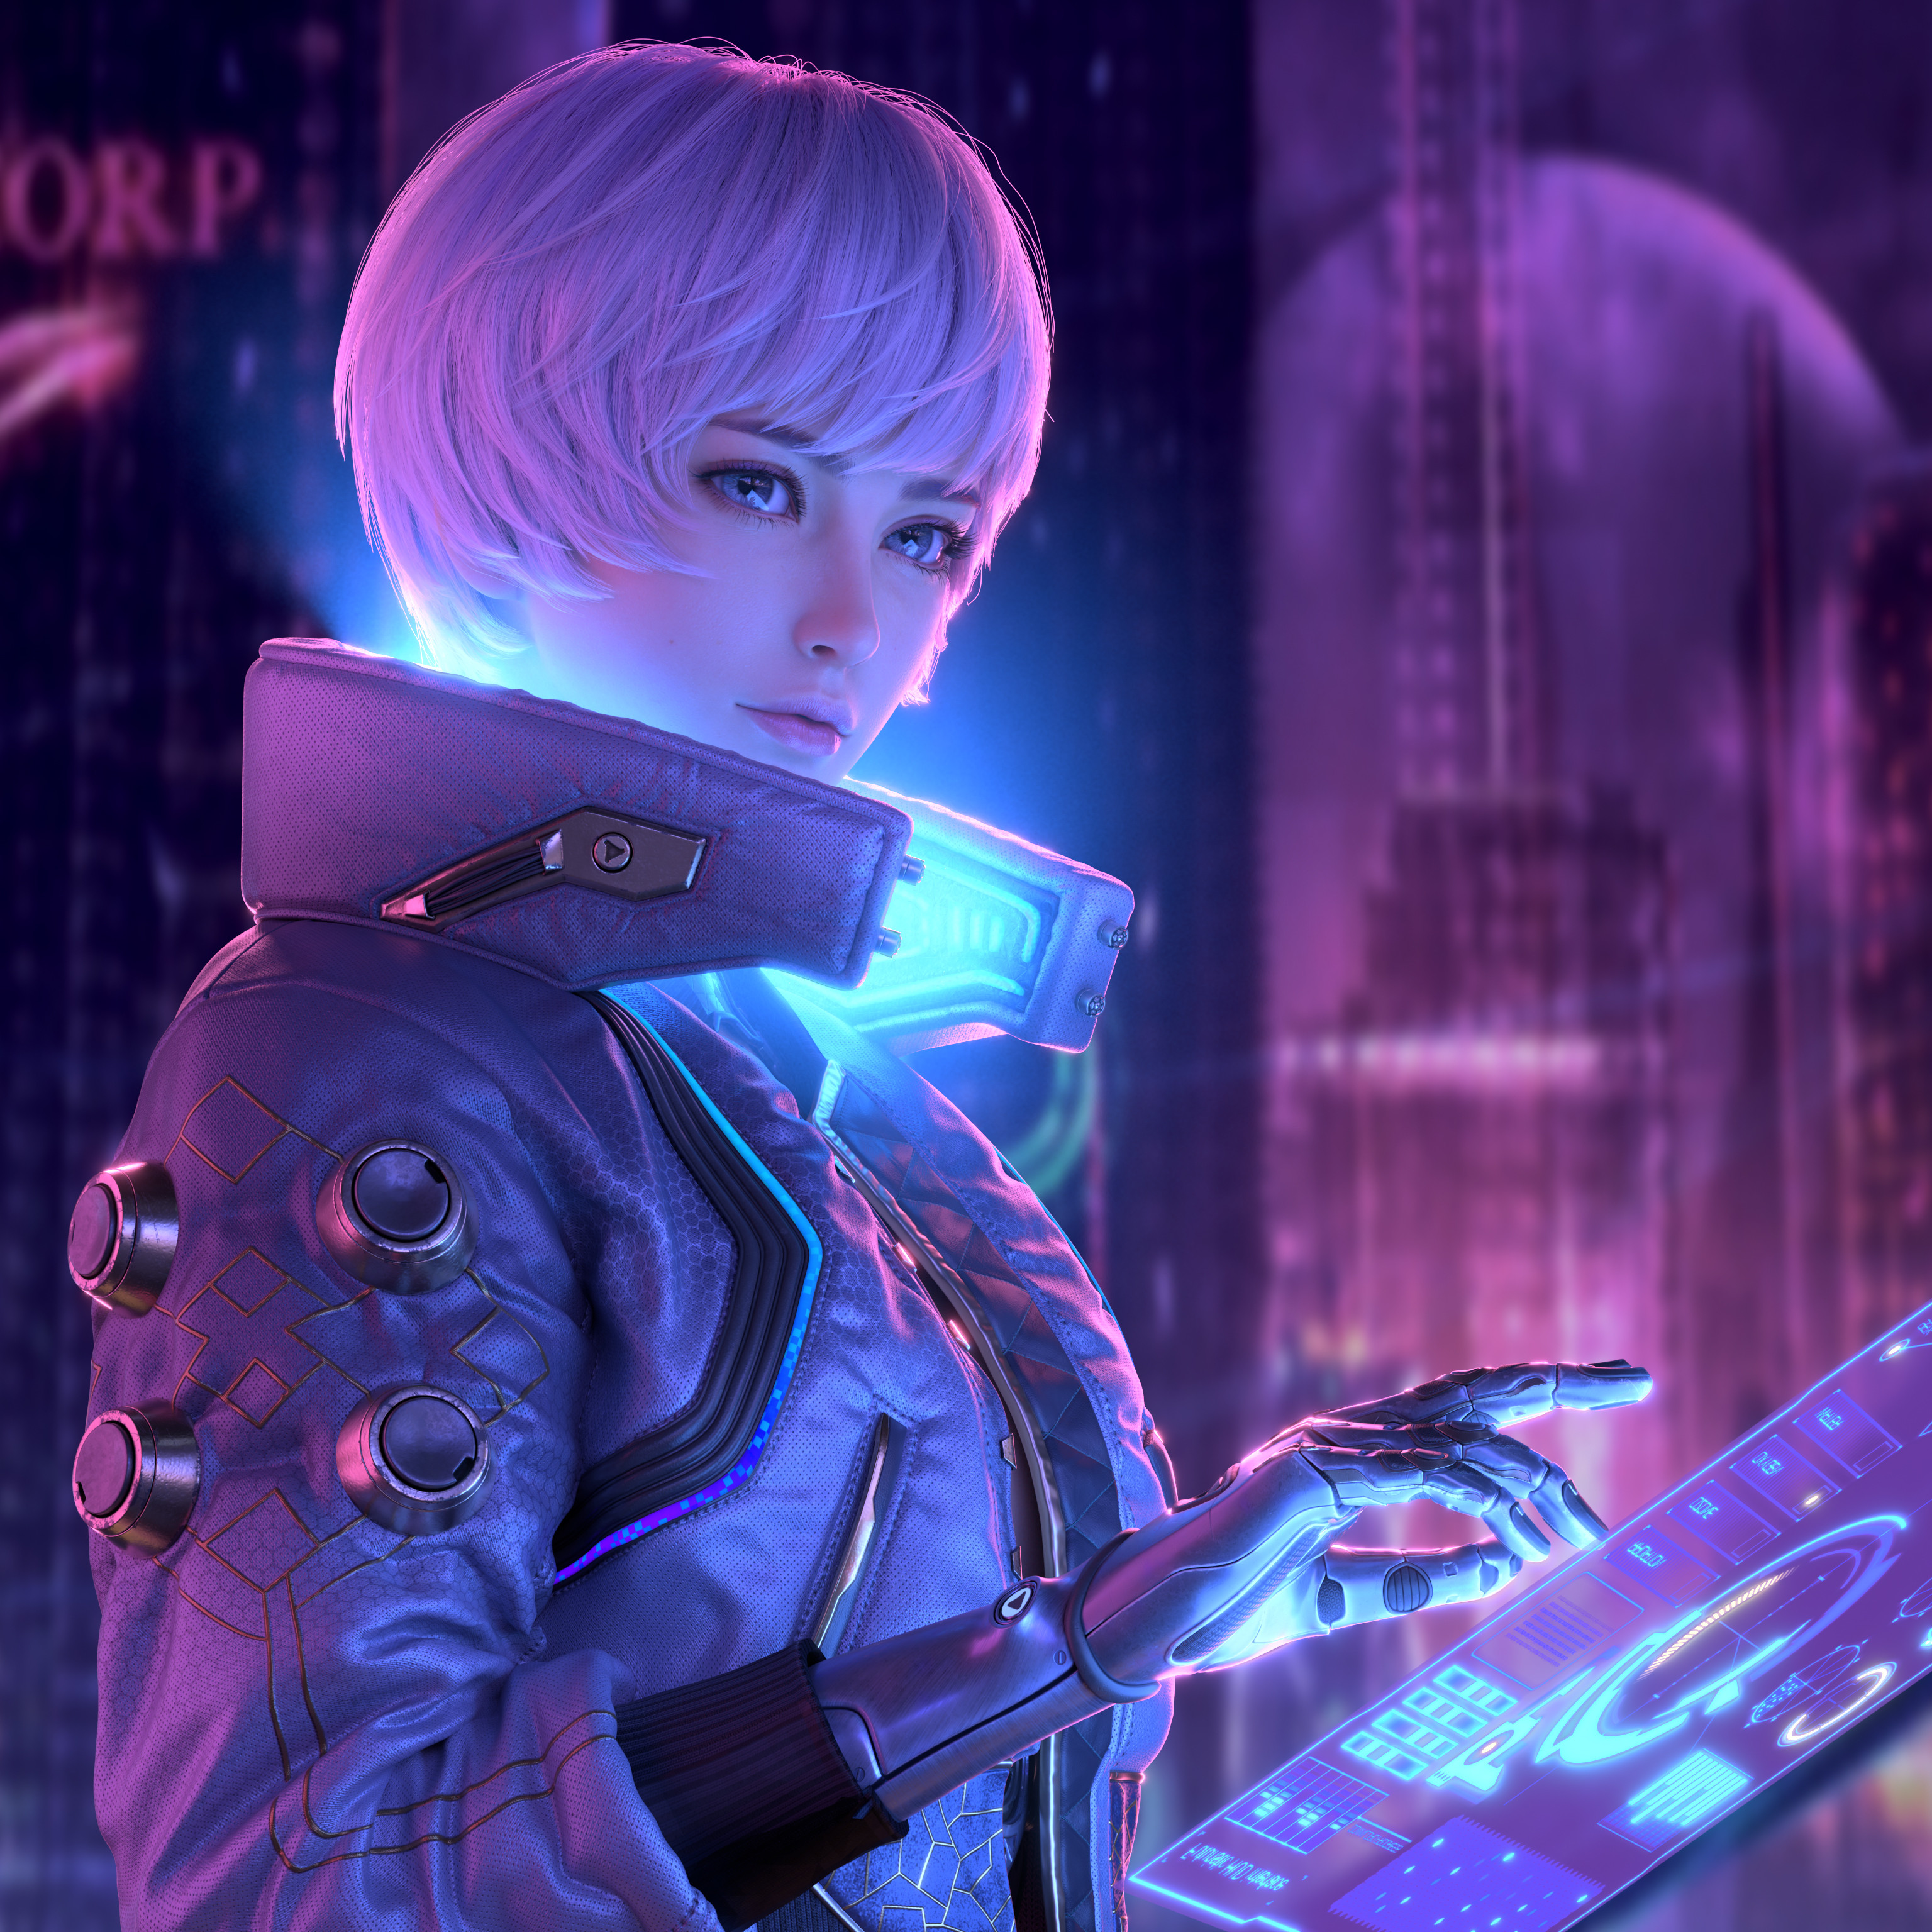 General 3072x3072 Huifeng Huang CGI women androids short hair purple hair bangs blue eyes jacket neon cyberpunk digital art